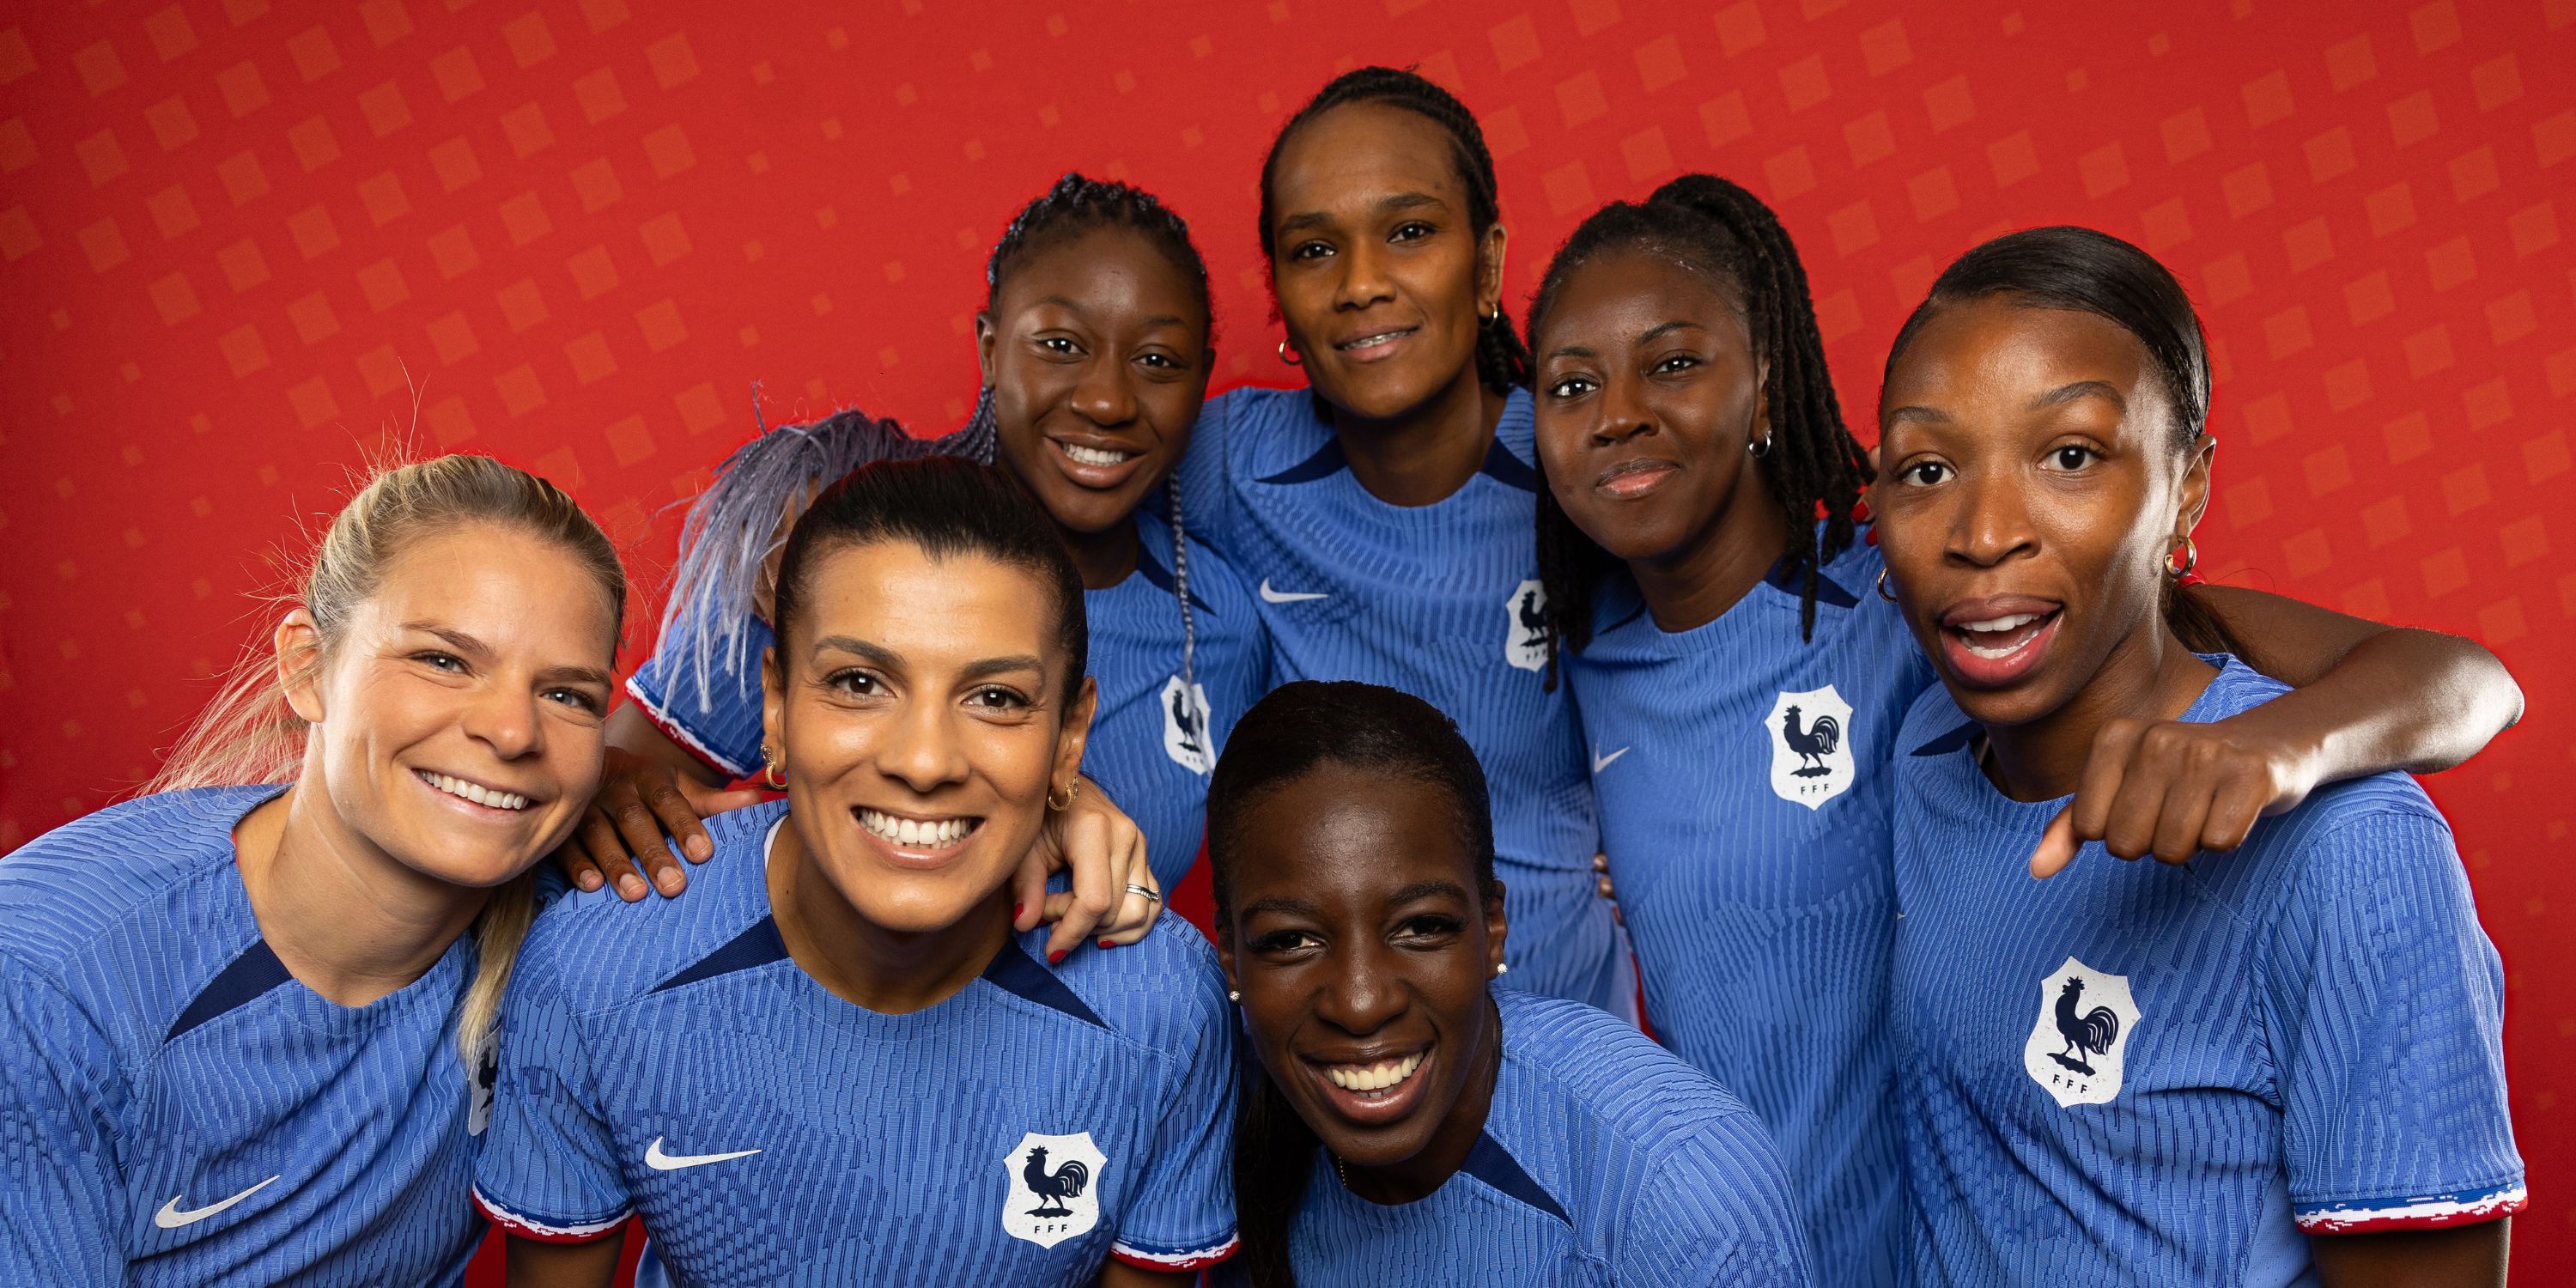 French women's team